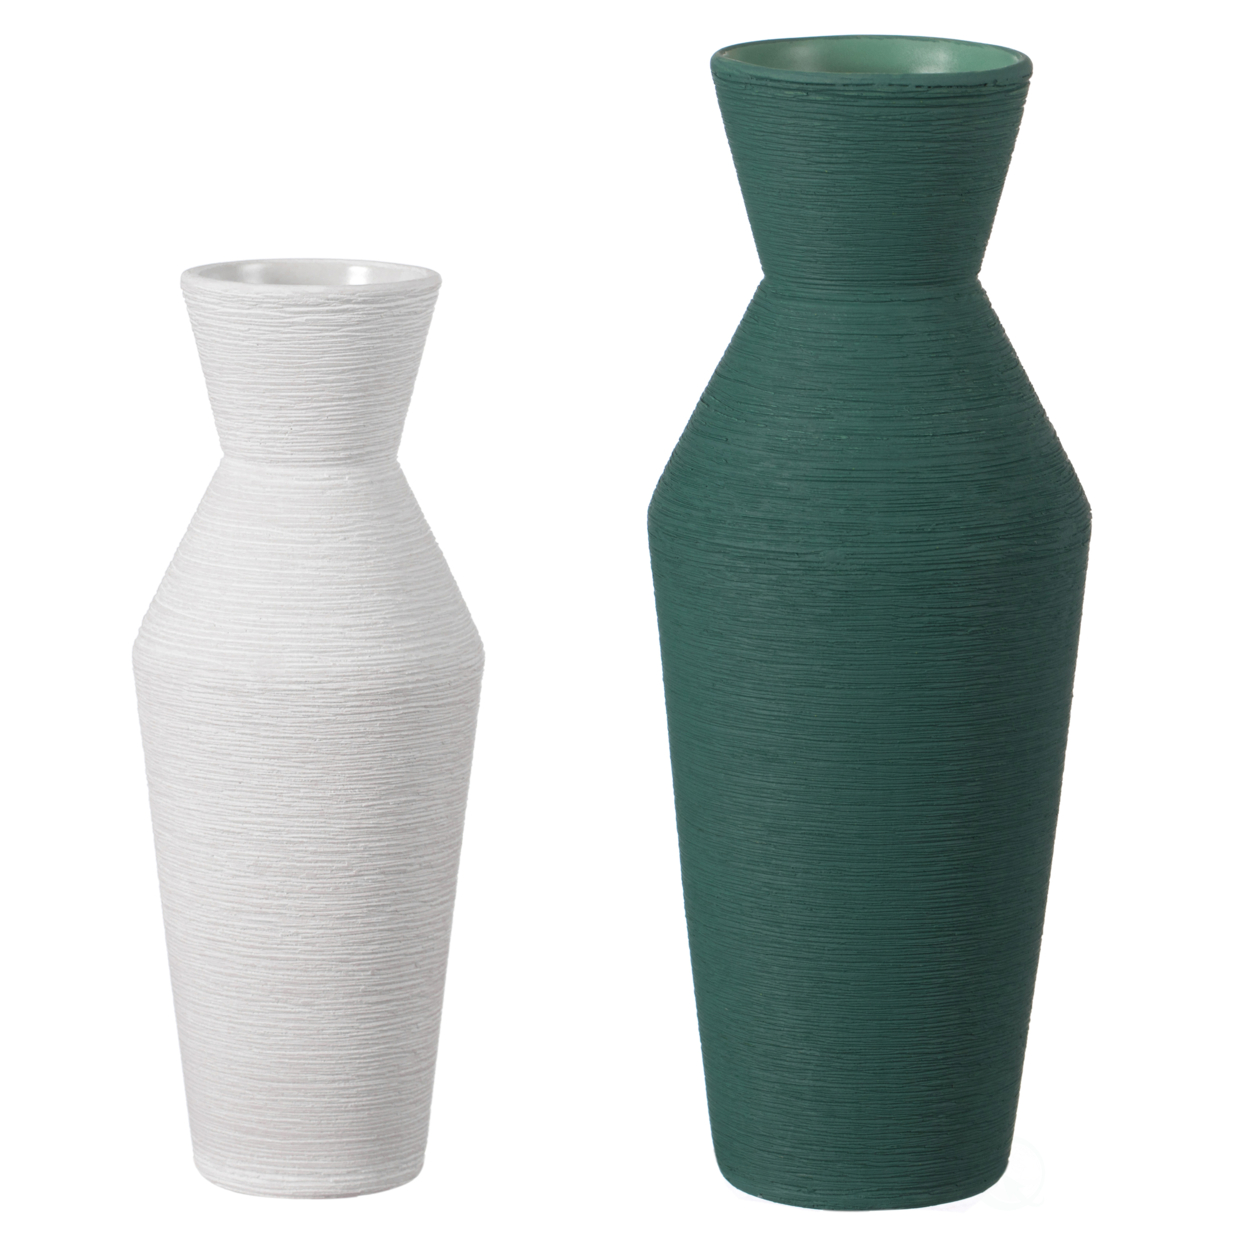 Decorative Ceramic Round Sharp Concaved Top Vase Centerpiece Table Vase - White